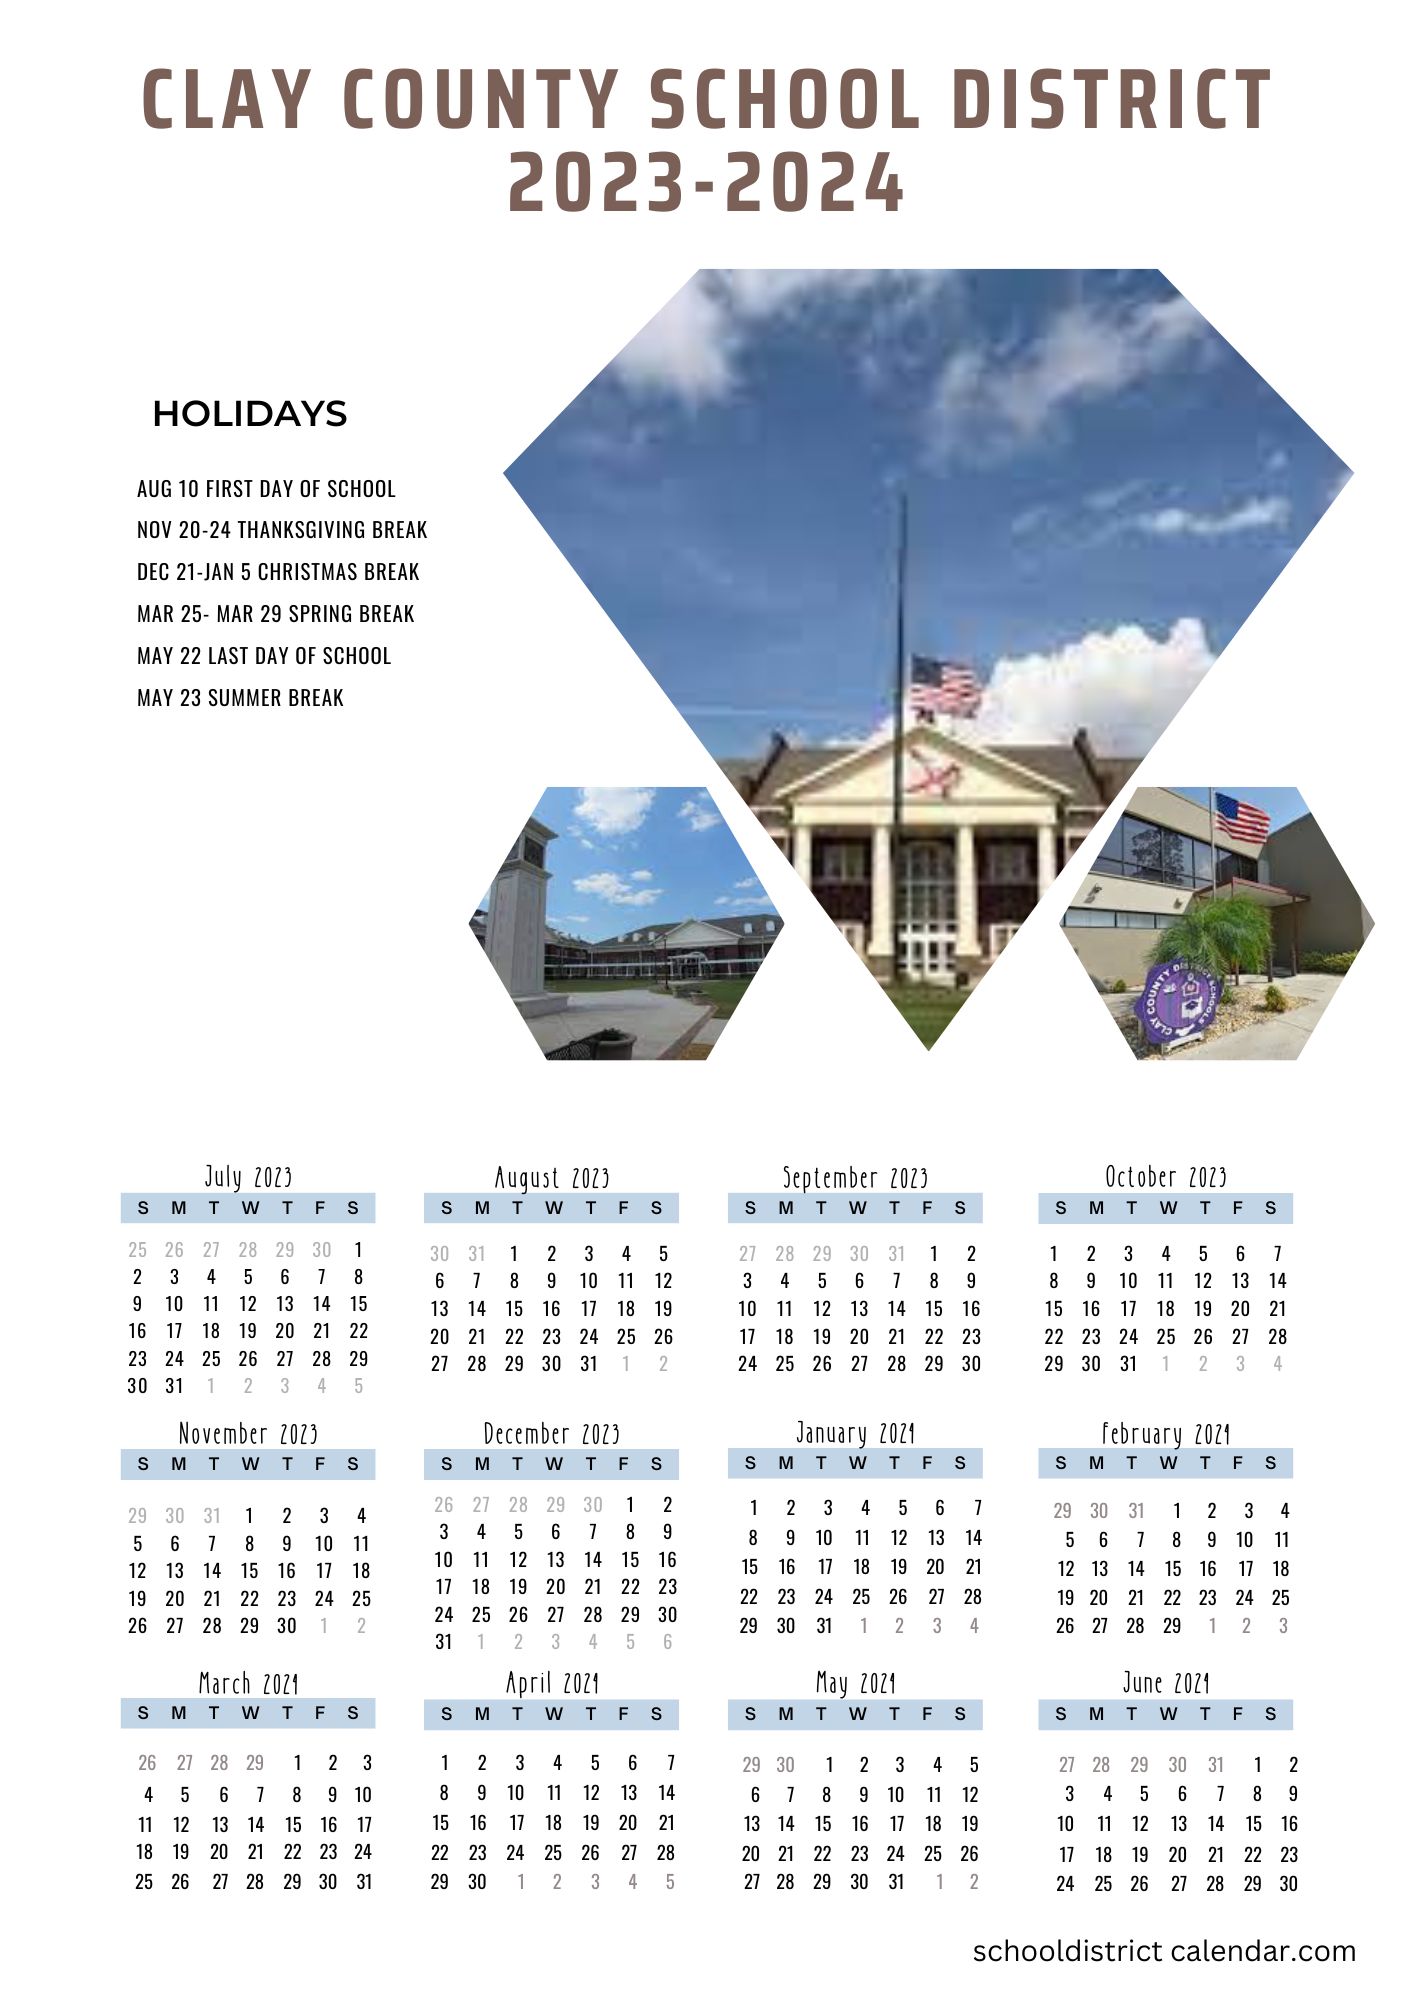 clay-county-schools-calendar-holidays-2023-2024